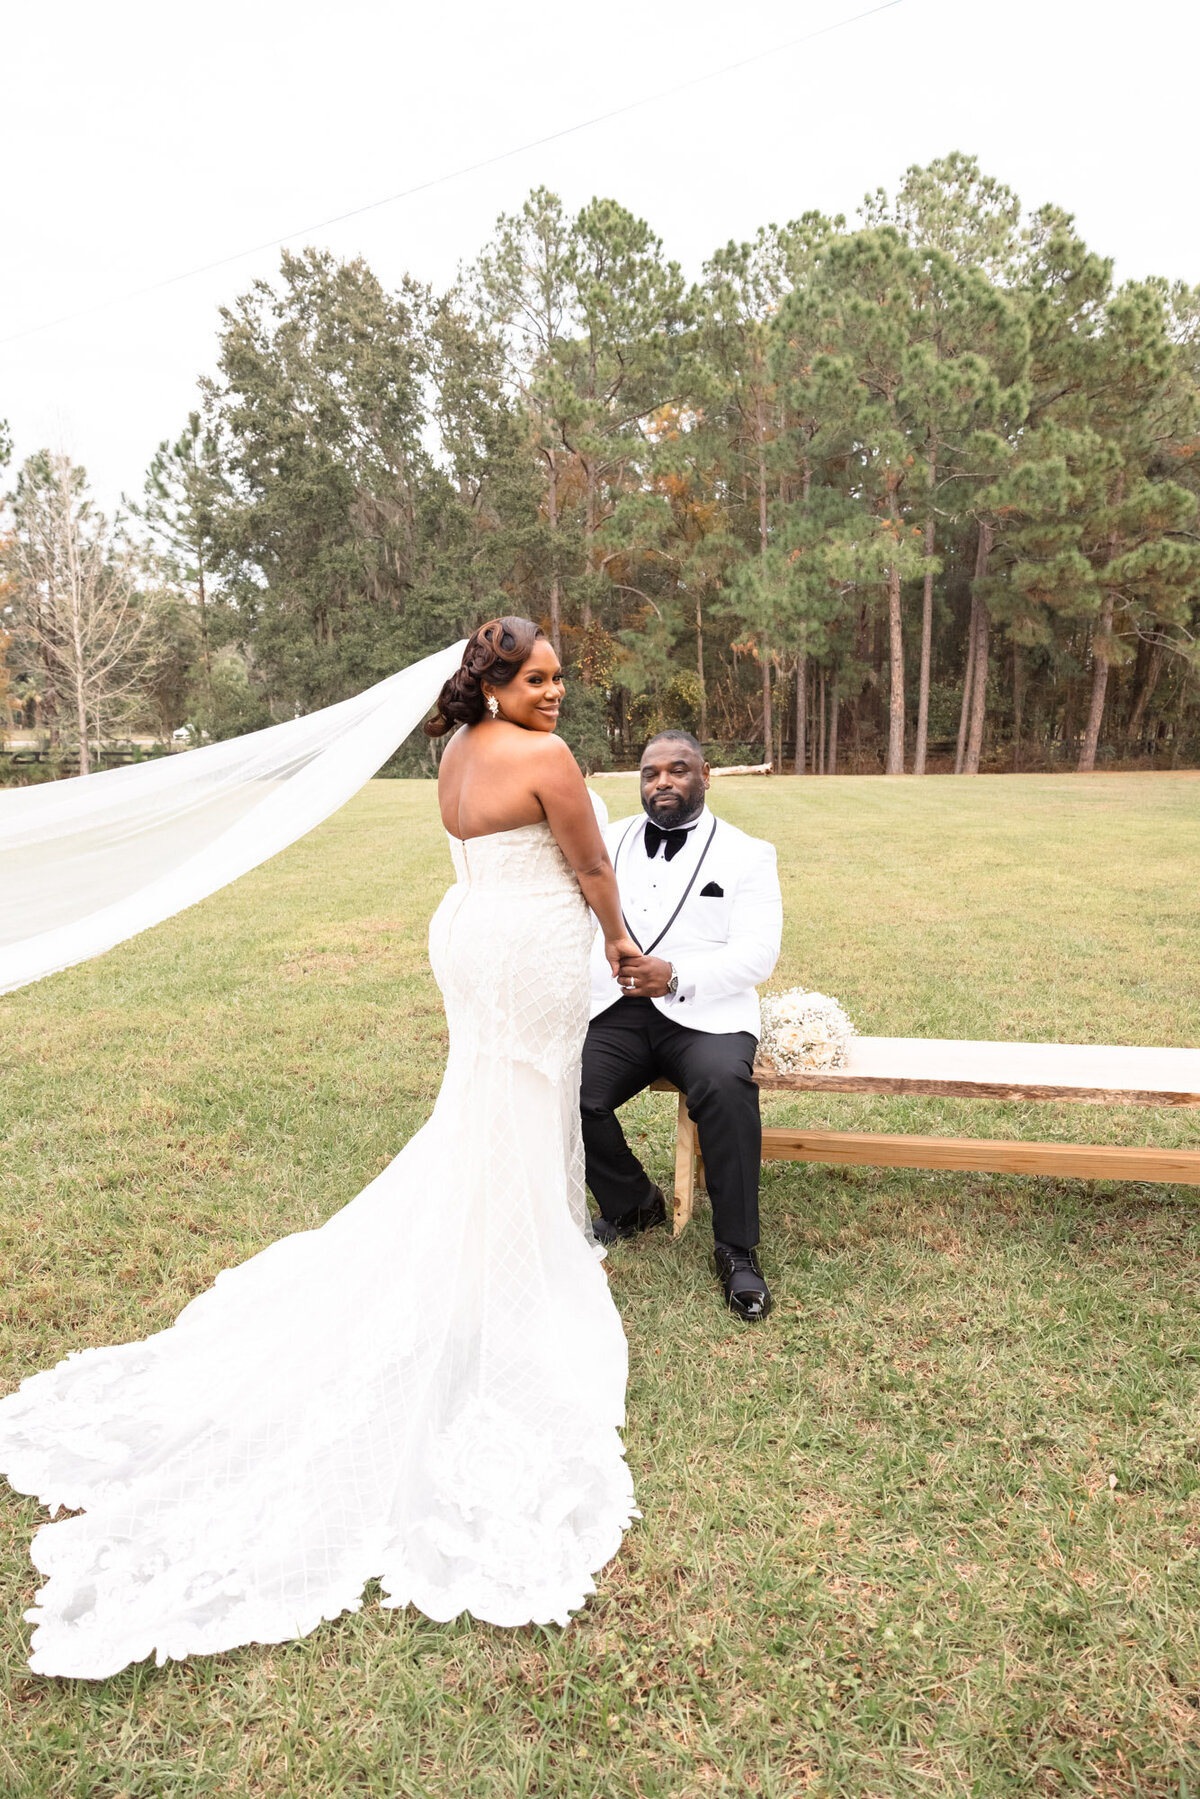 Michael and Mishka-Wedding-Green Cabin Ranch-Astatula, FL-FL Wedding Photographer-Orlando Photographer-Emily Pillon Photography-S-120423-254